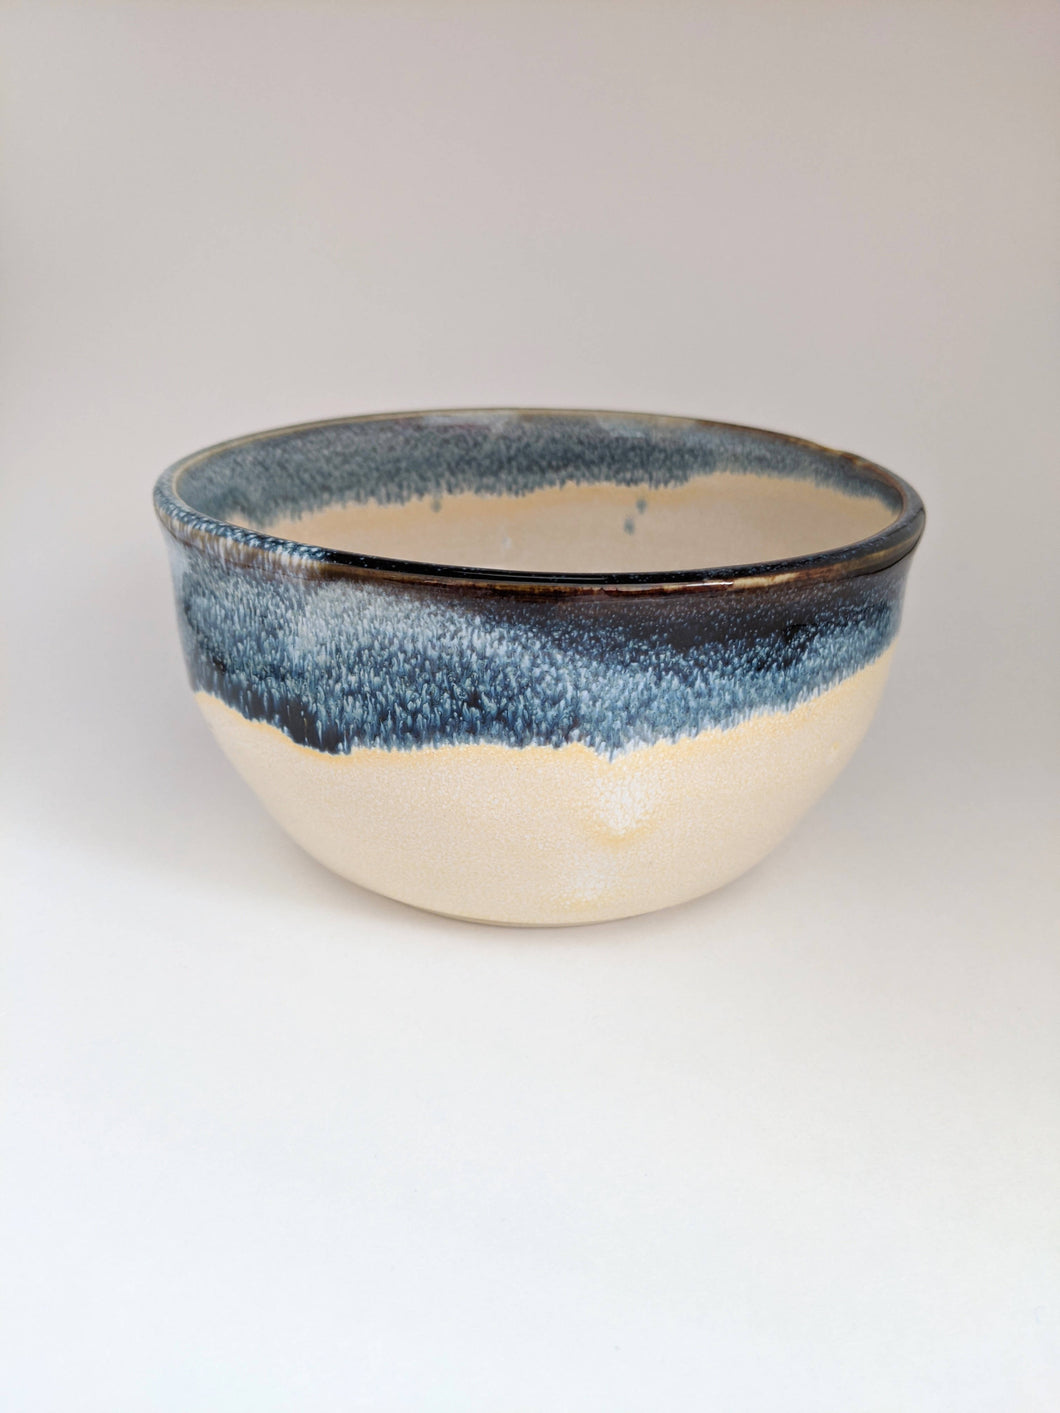 Falling water blue and cream Ceramic Bowl